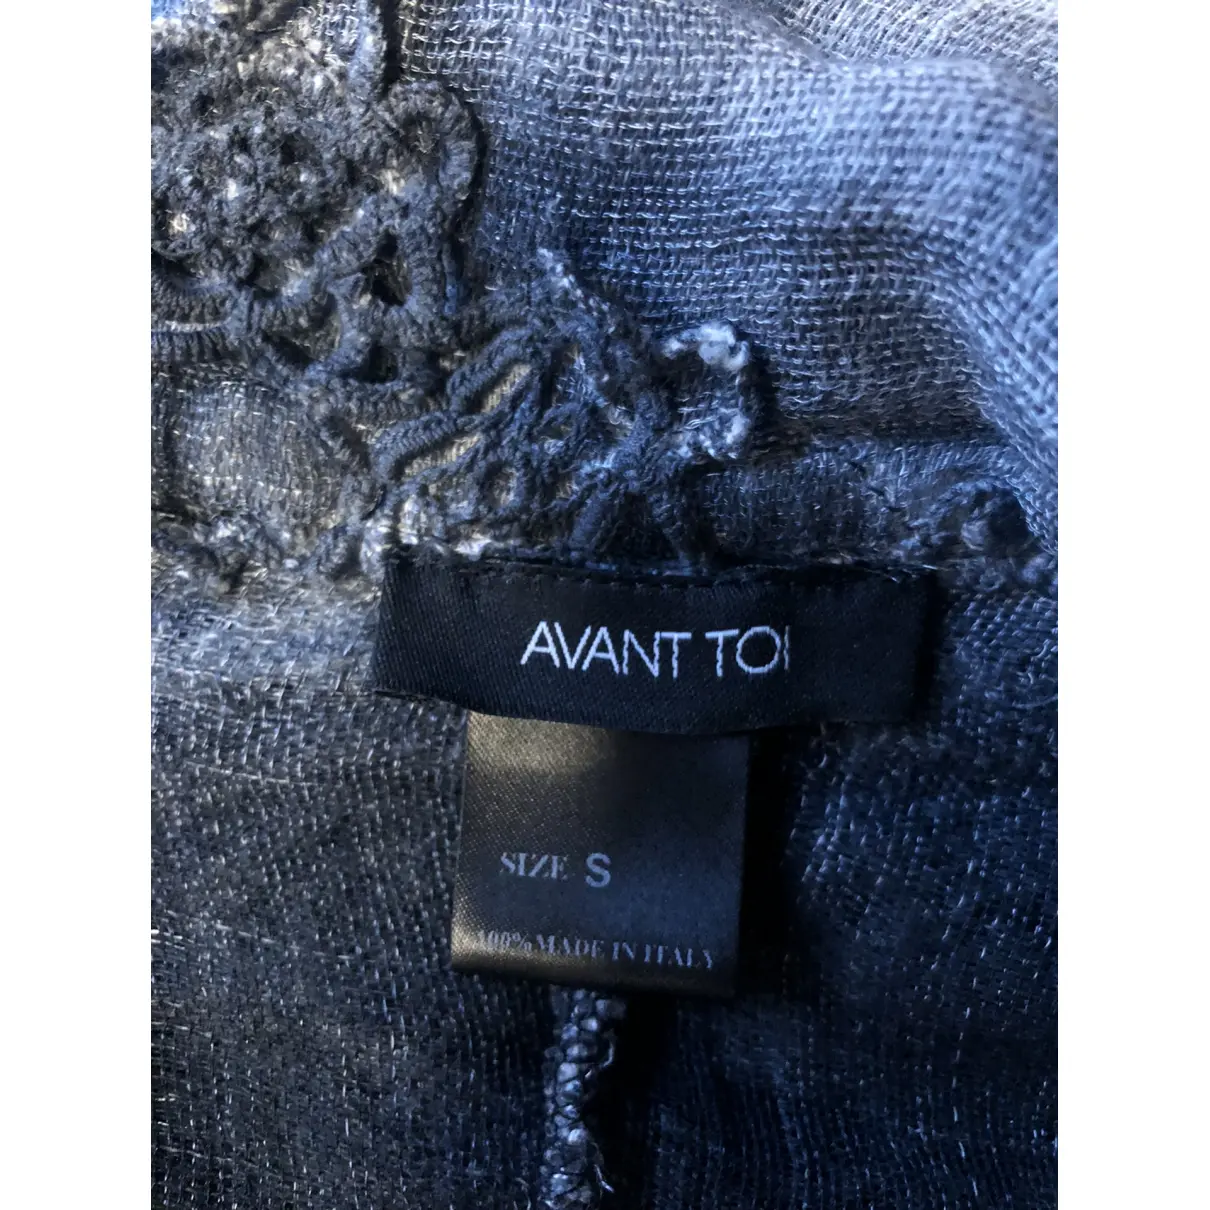 Buy AVANT TOI Jacket online